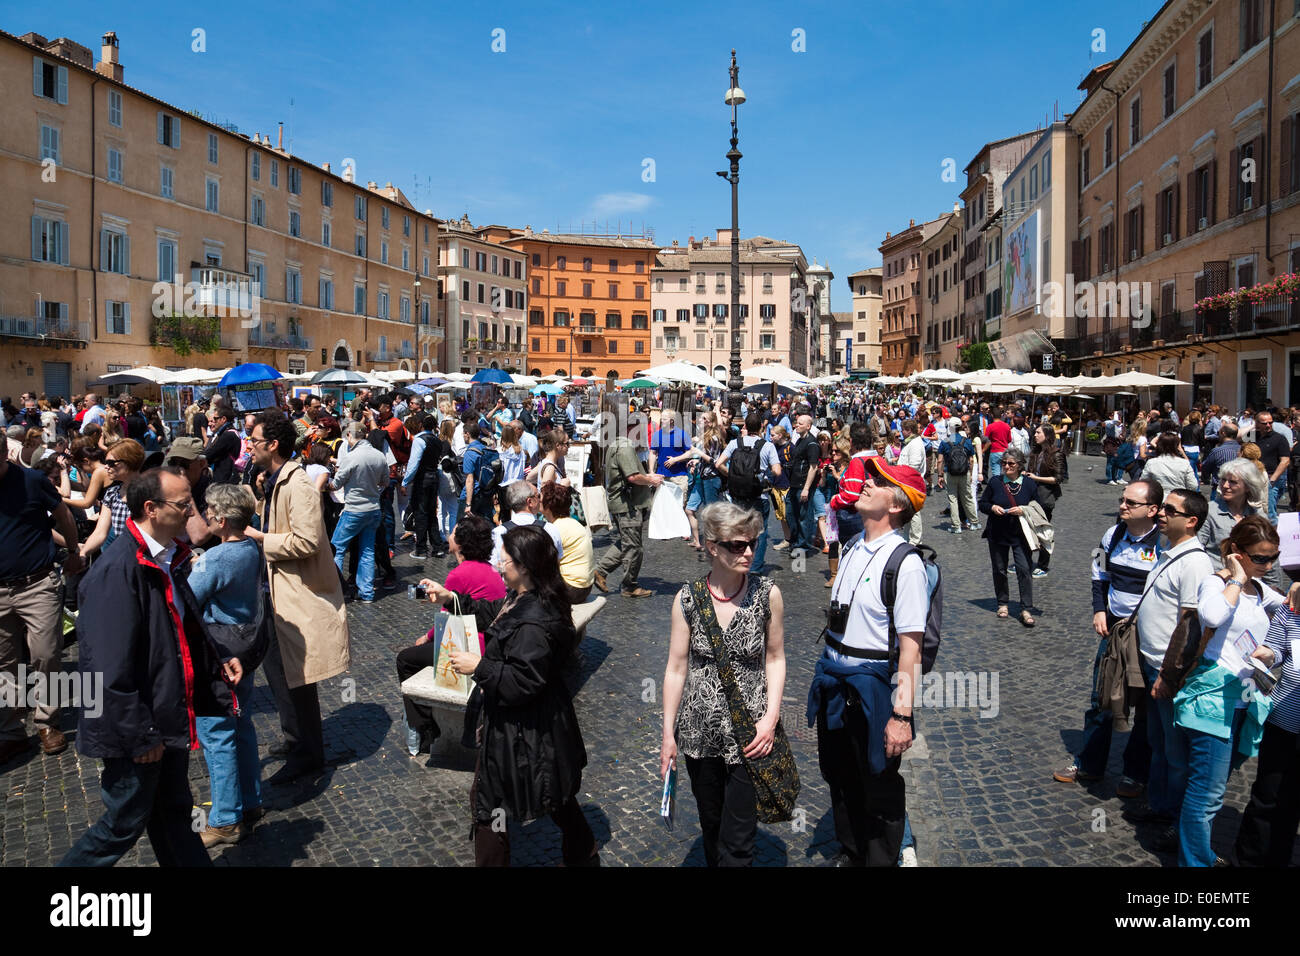 Piazza Navona, Rom, Italien - Piazza Navona, Rome, Italy Stock Photo